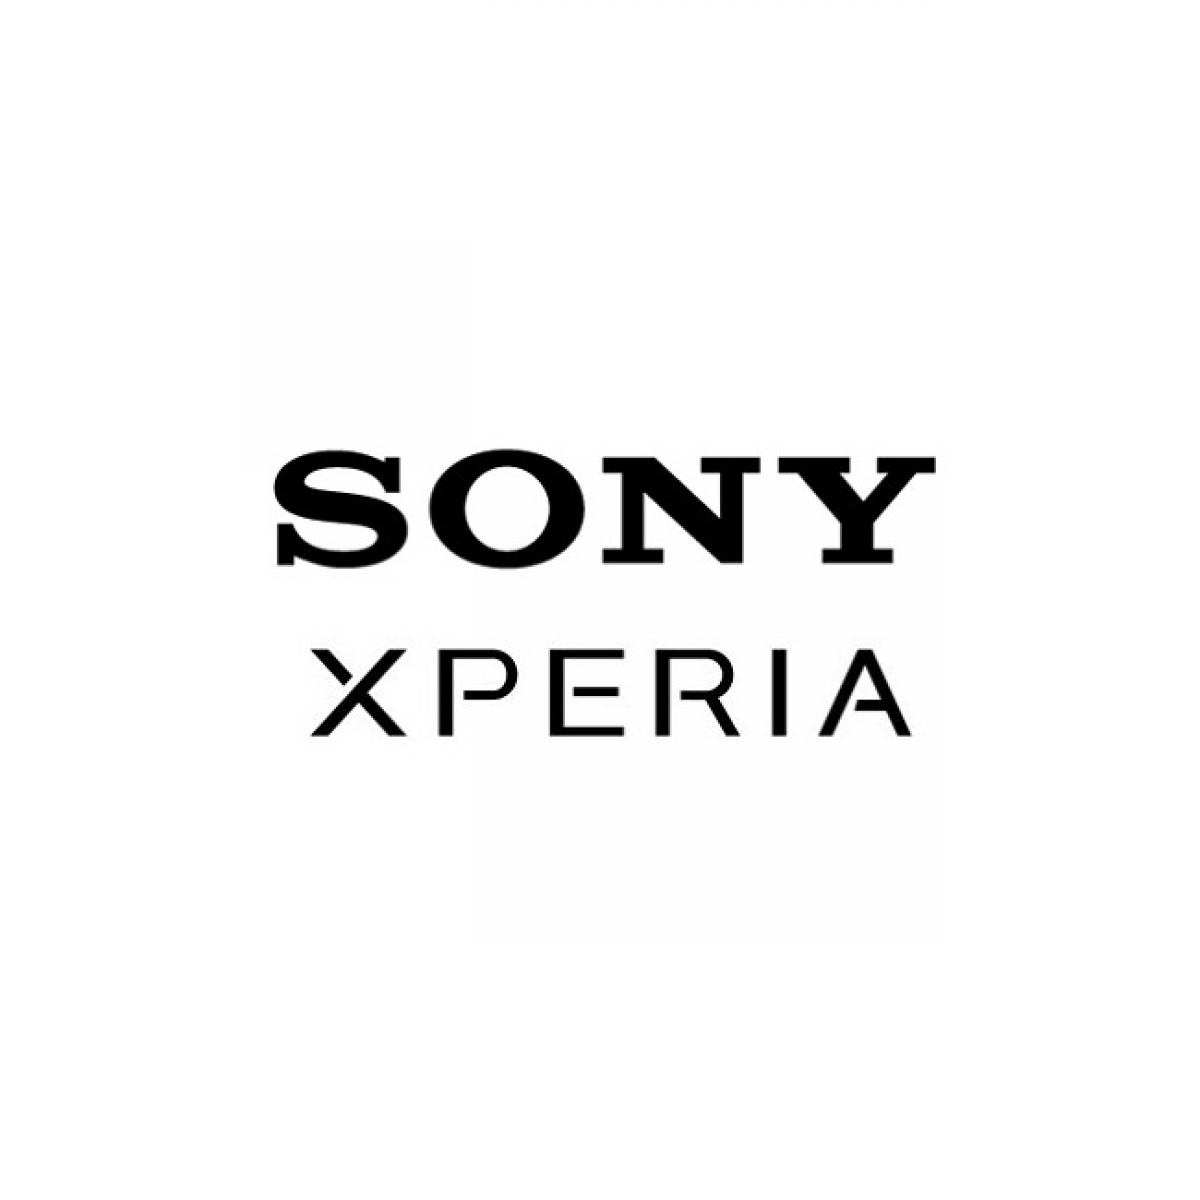 Sony xperia